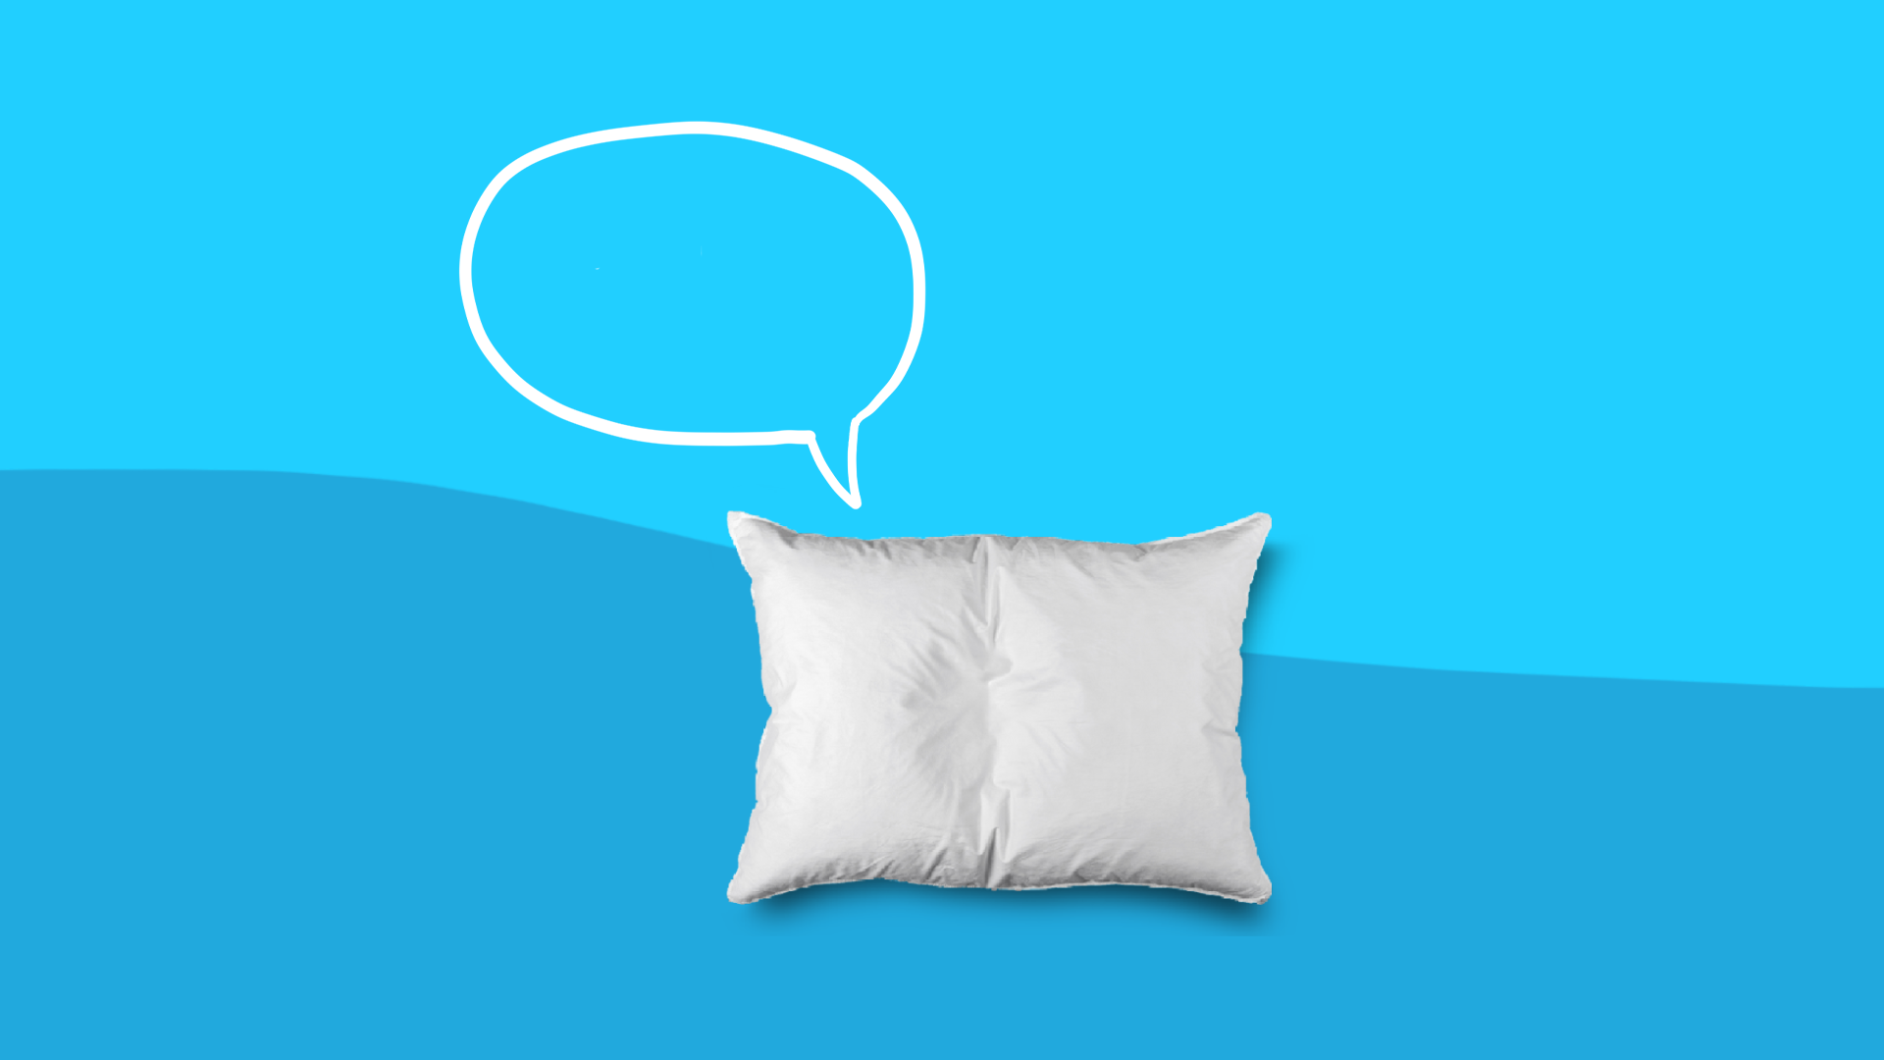 A pillow represents sleep remedies